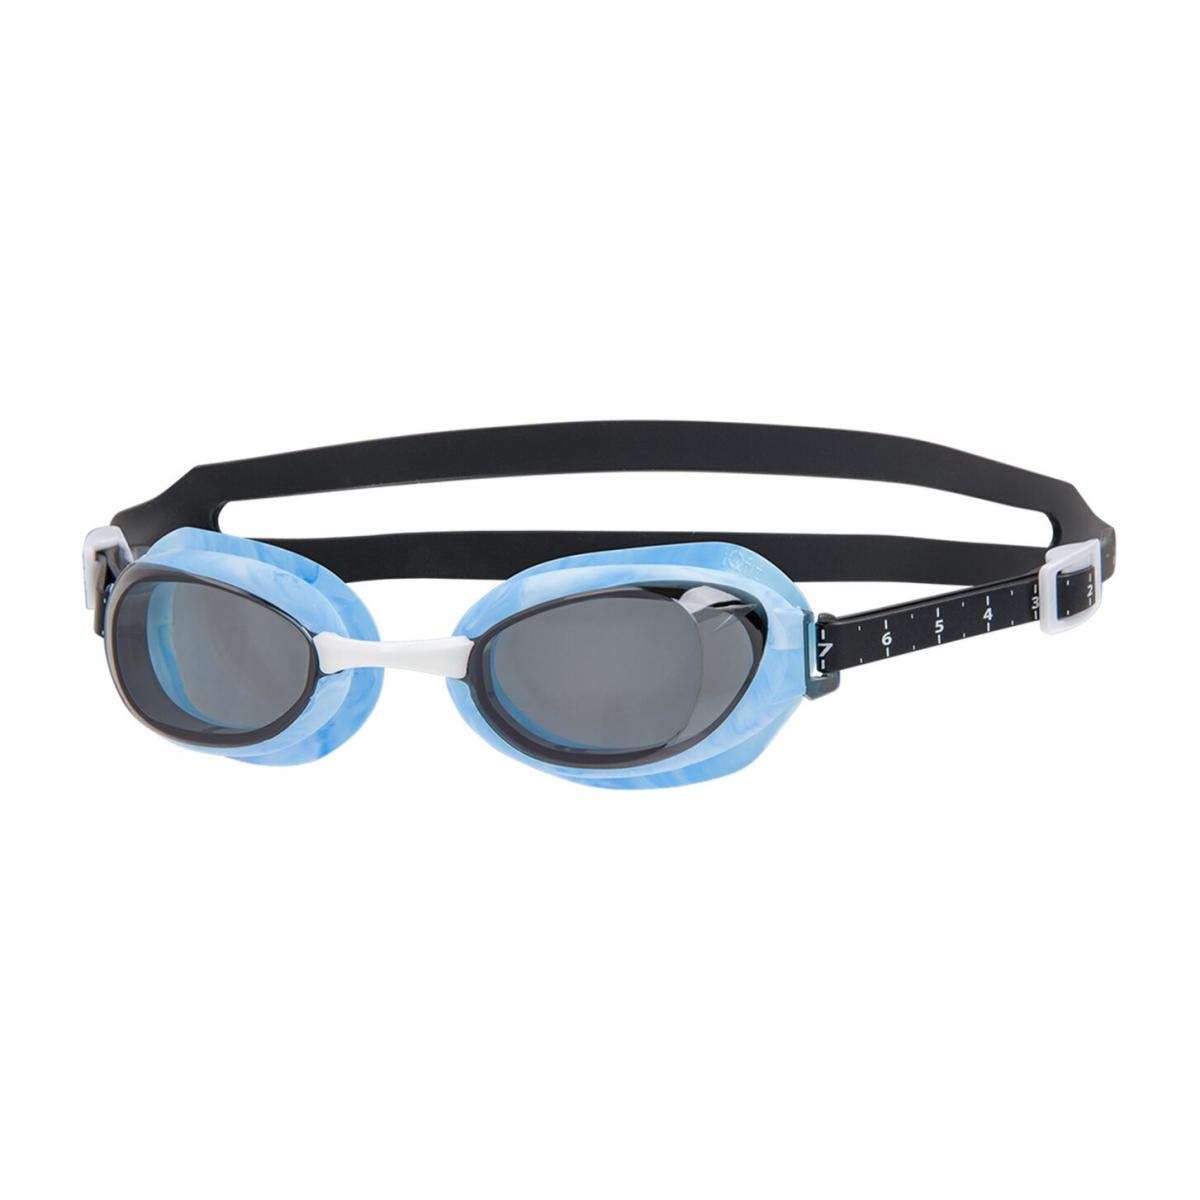 Speedo Aquapure Goggle IQFit ~ Black/White/Smoke ~ FREE CARRY CASE 